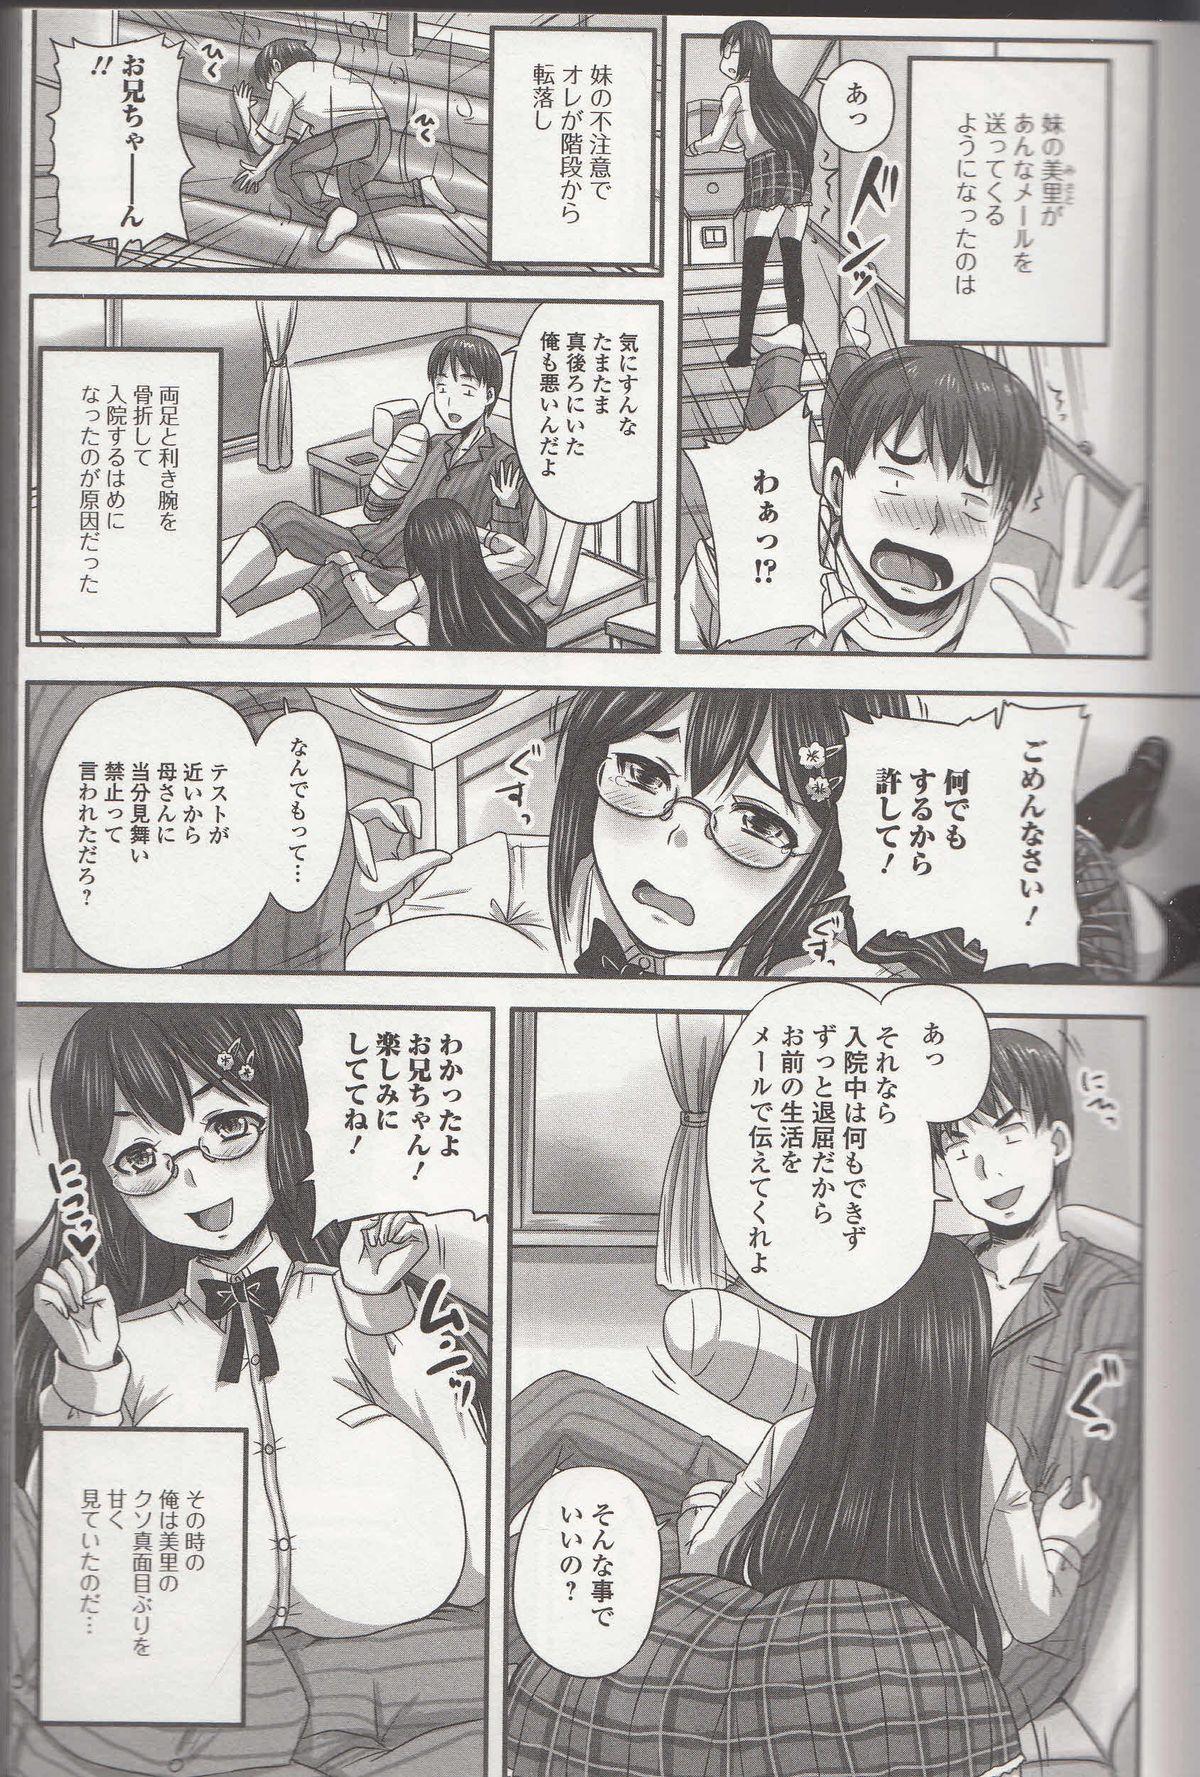 Piss Nozoite wa Ikenai NEO - Do Not Peep NEO! Juicy - Page 7